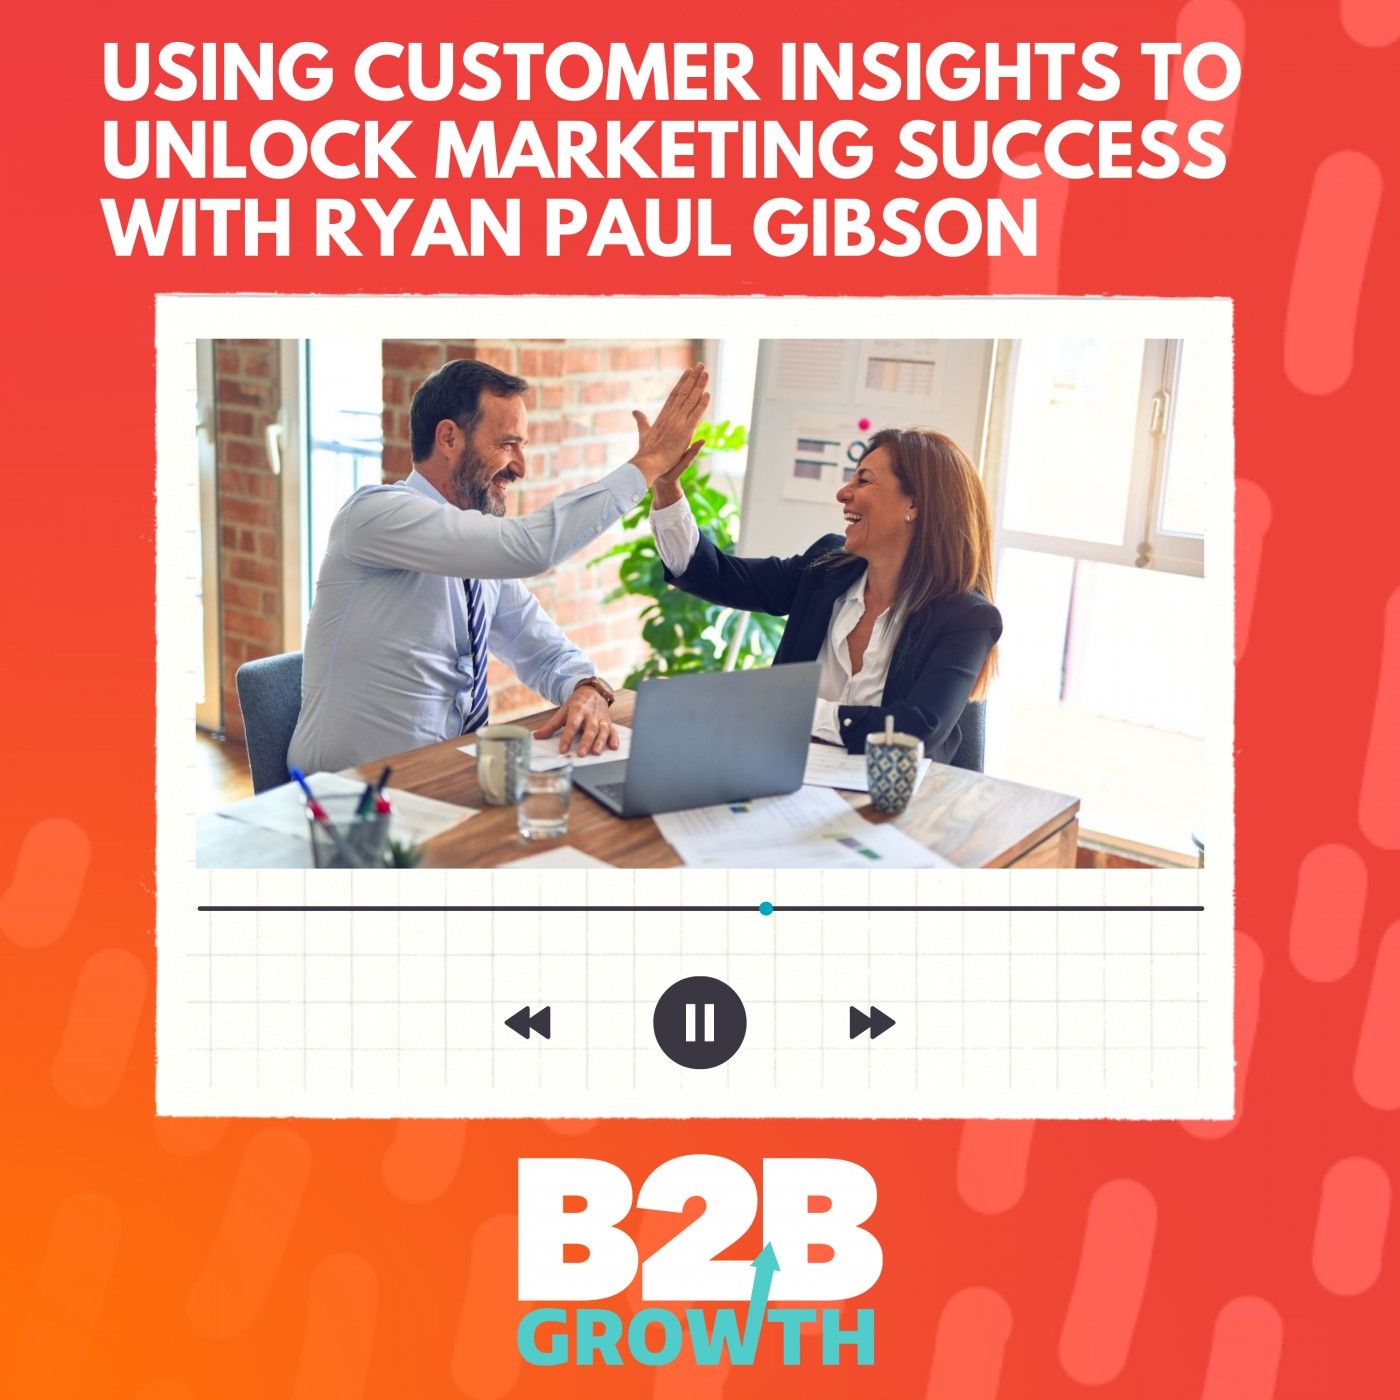 Using Customer Insights to Unlock Marketing Success, with Ryan Paul Gibson